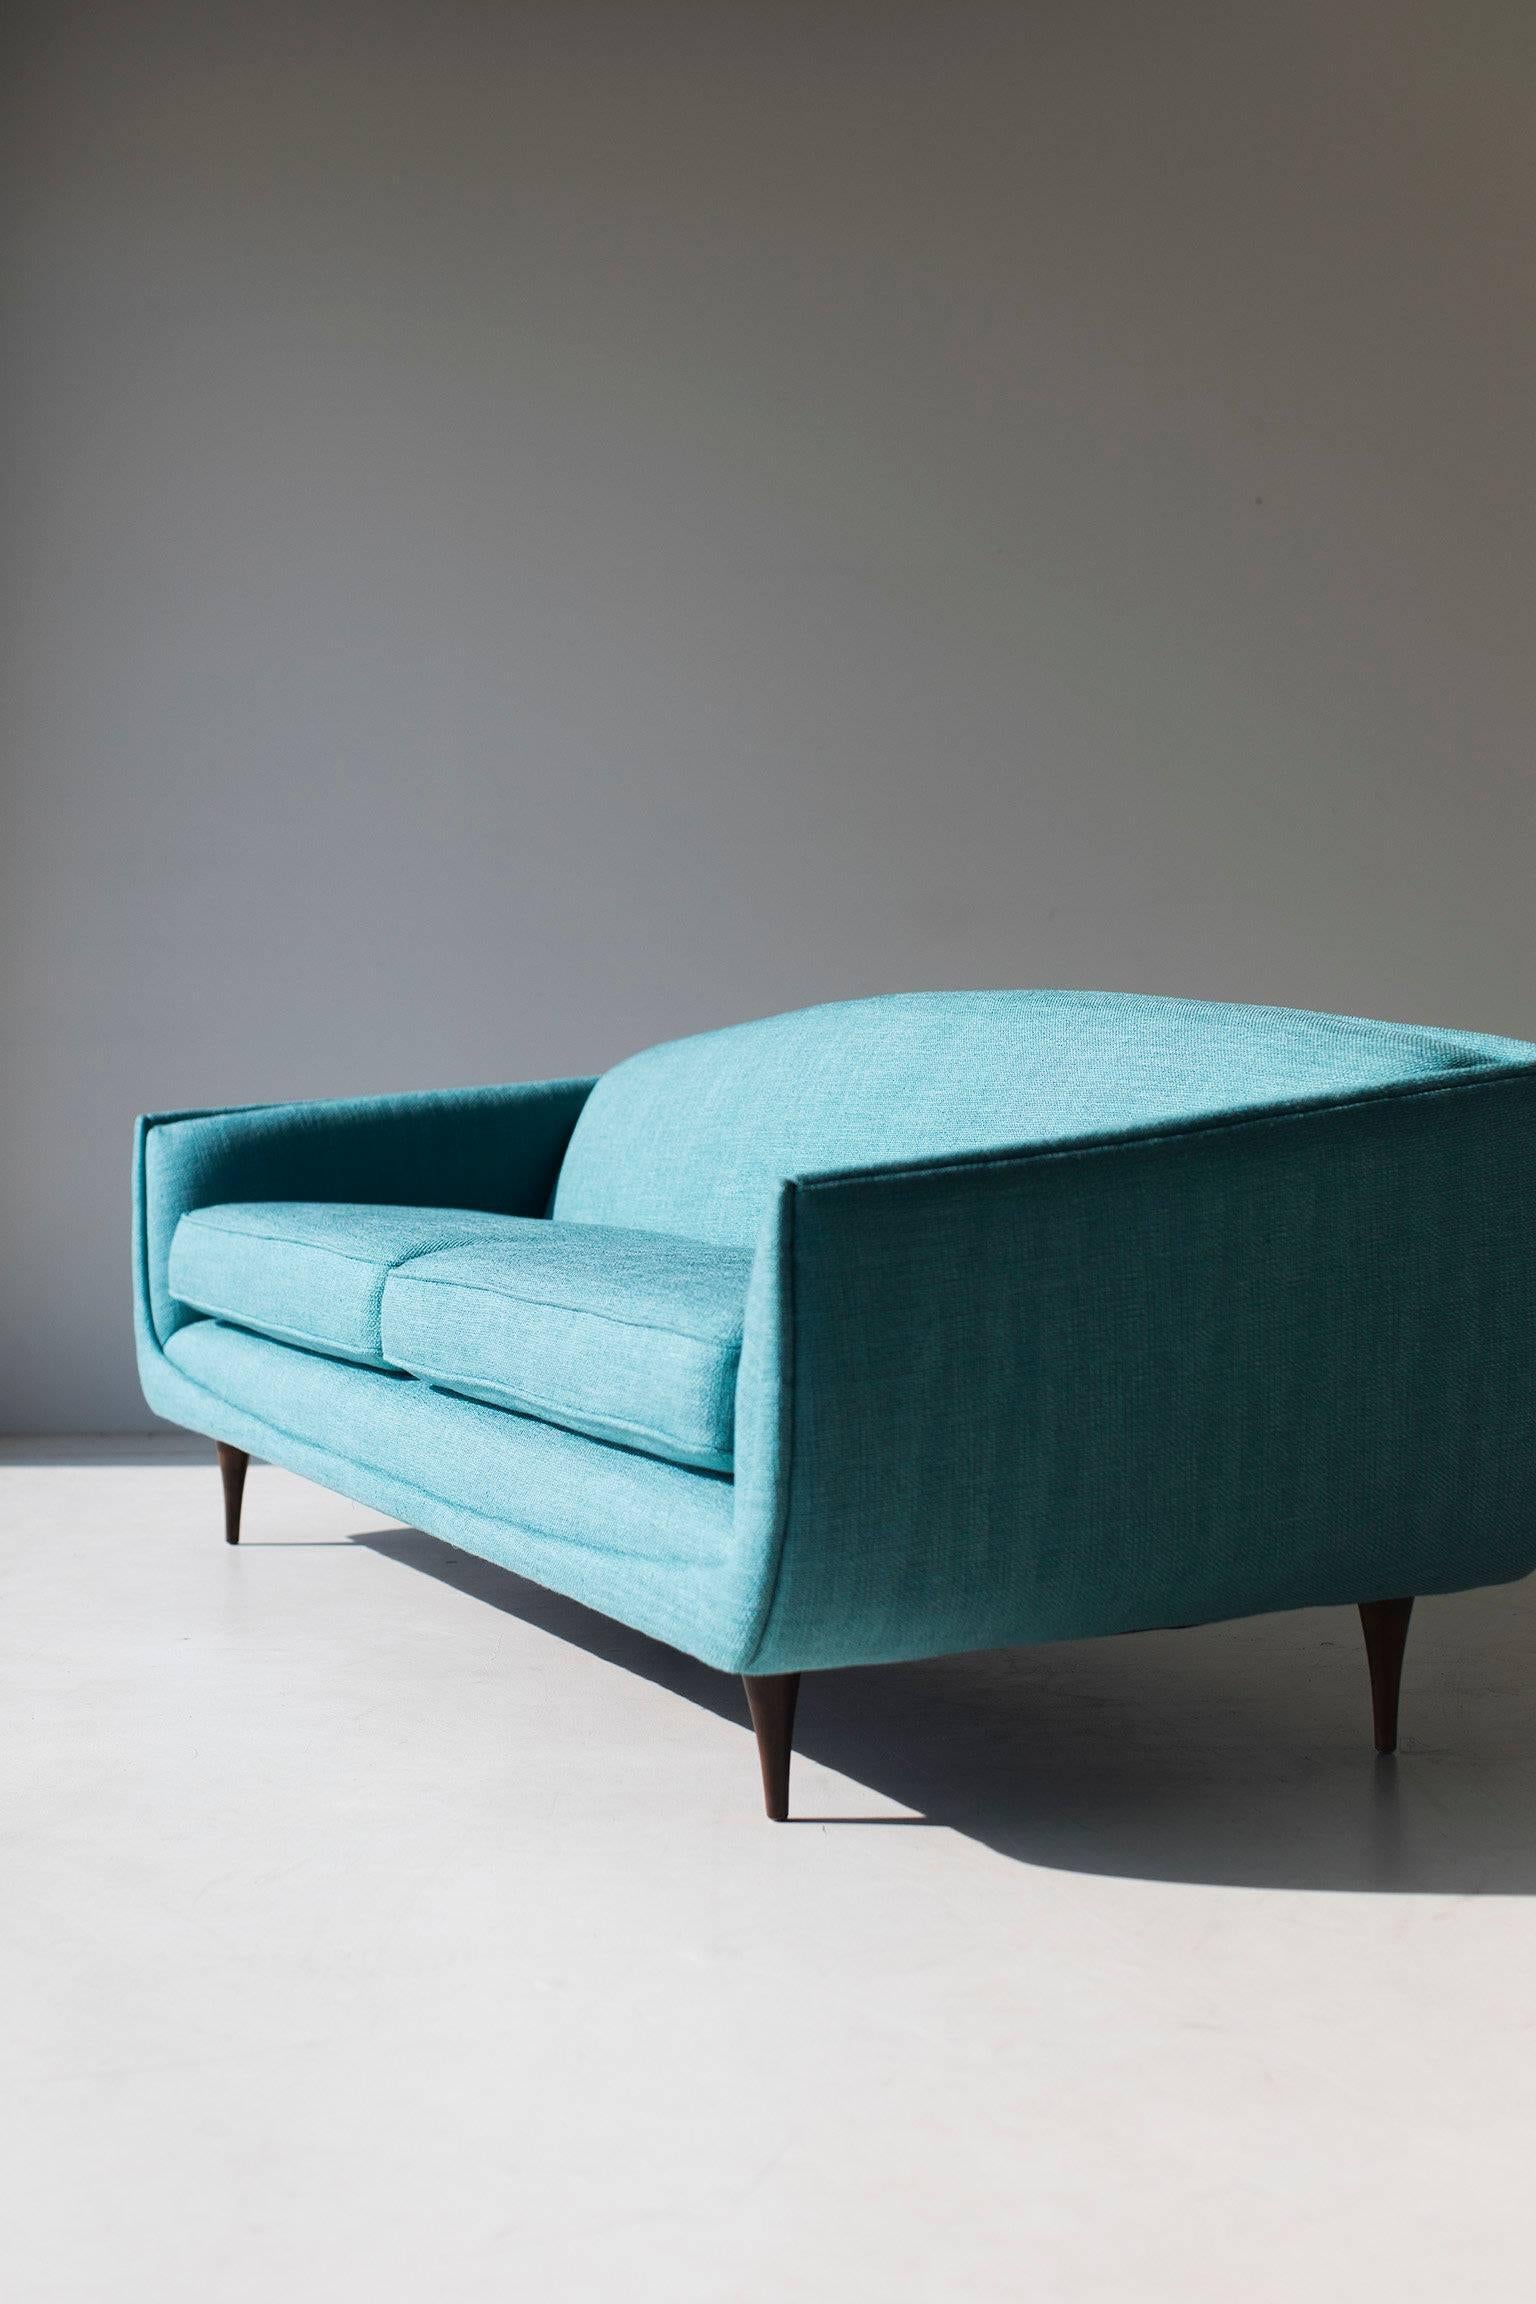 Selig Sofa Designer Attributed to William Hinn 2